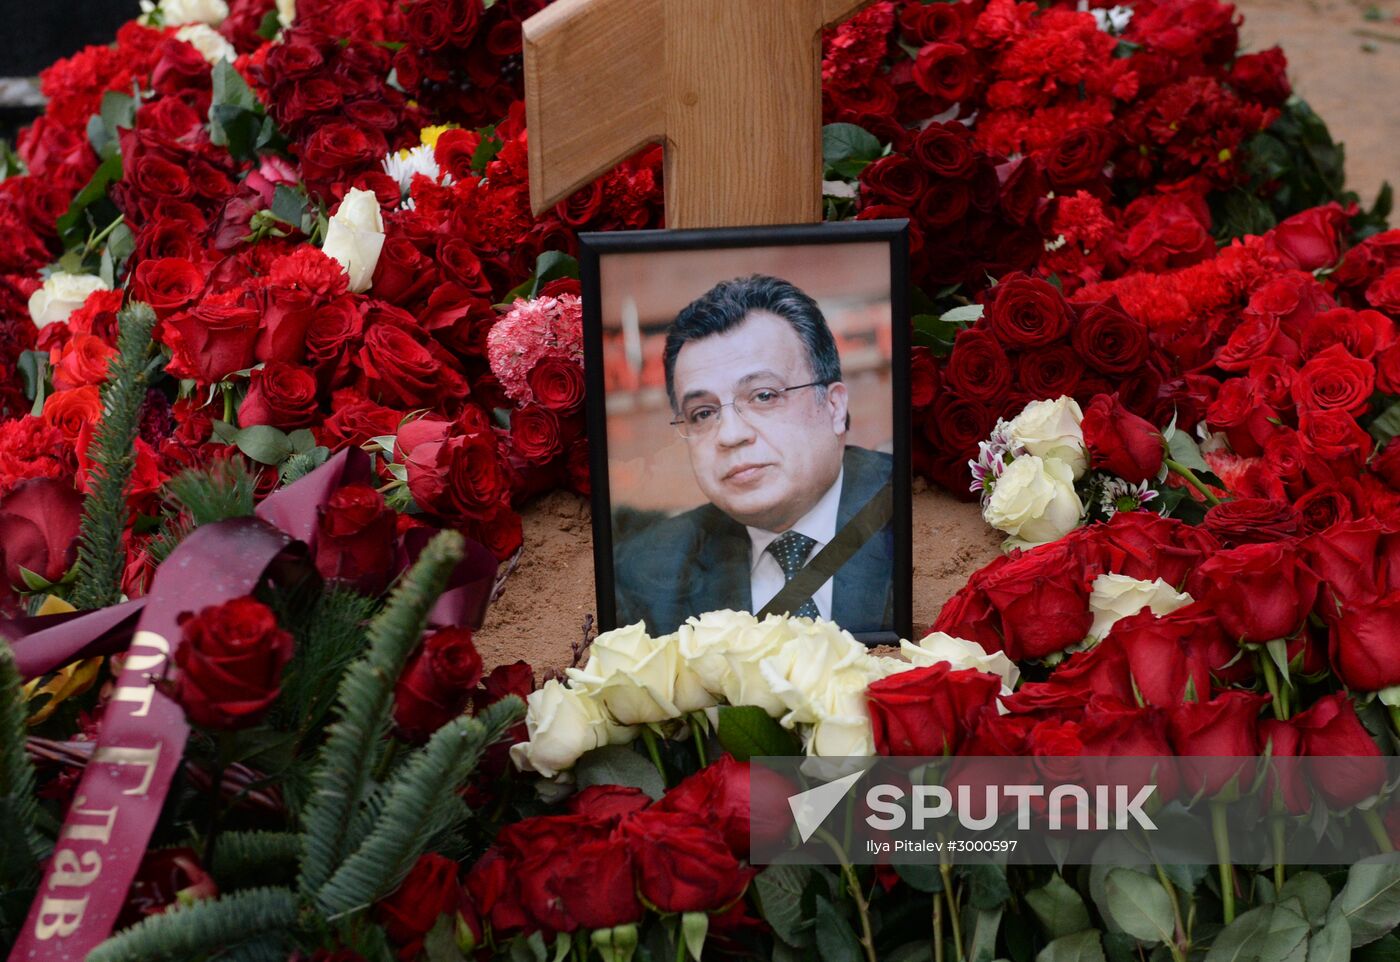 Funeral of Russian Ambassador to Turkey Andrei Karlov